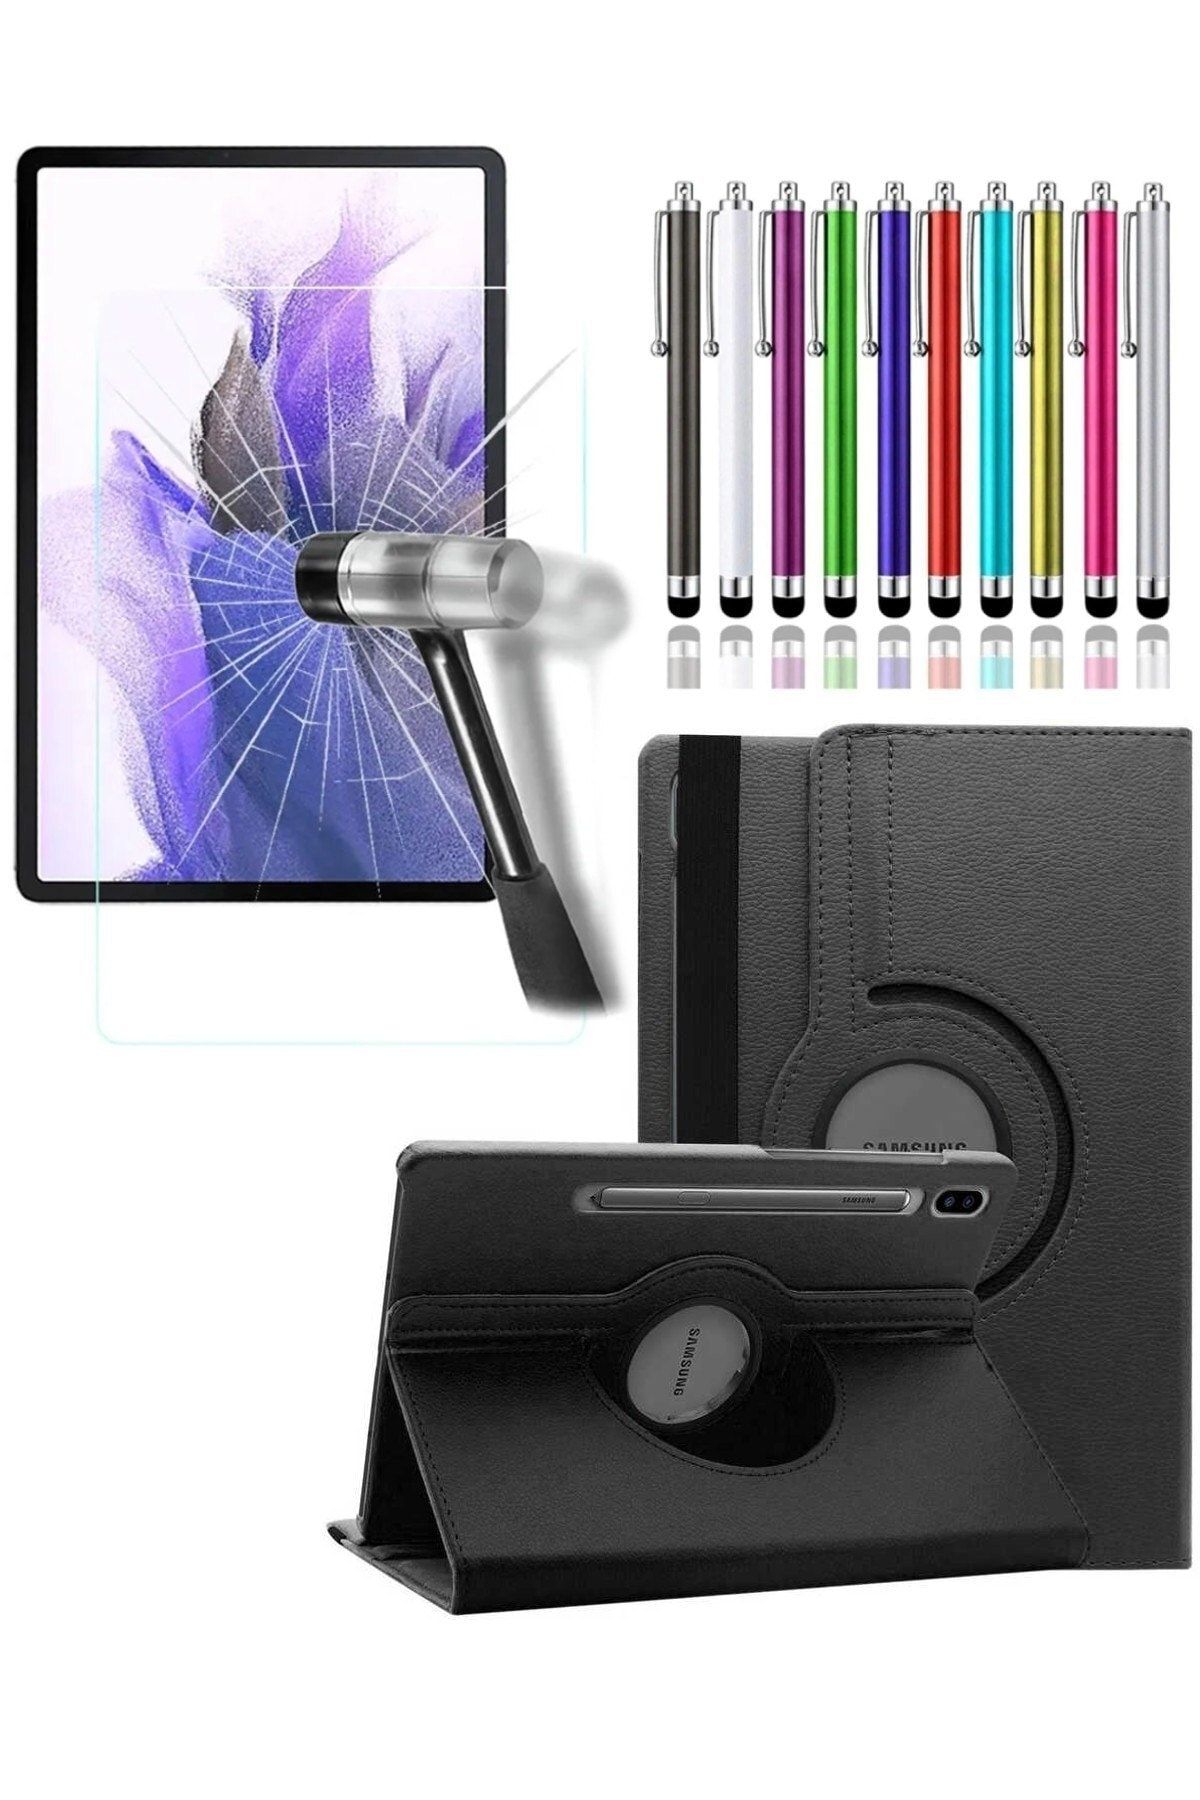 piblue Samsung Galaxy Tab S7 Sm-t870 / T875 / T877 ) 11 Inç Kılıf Tablet Kılıfı 3lü Set